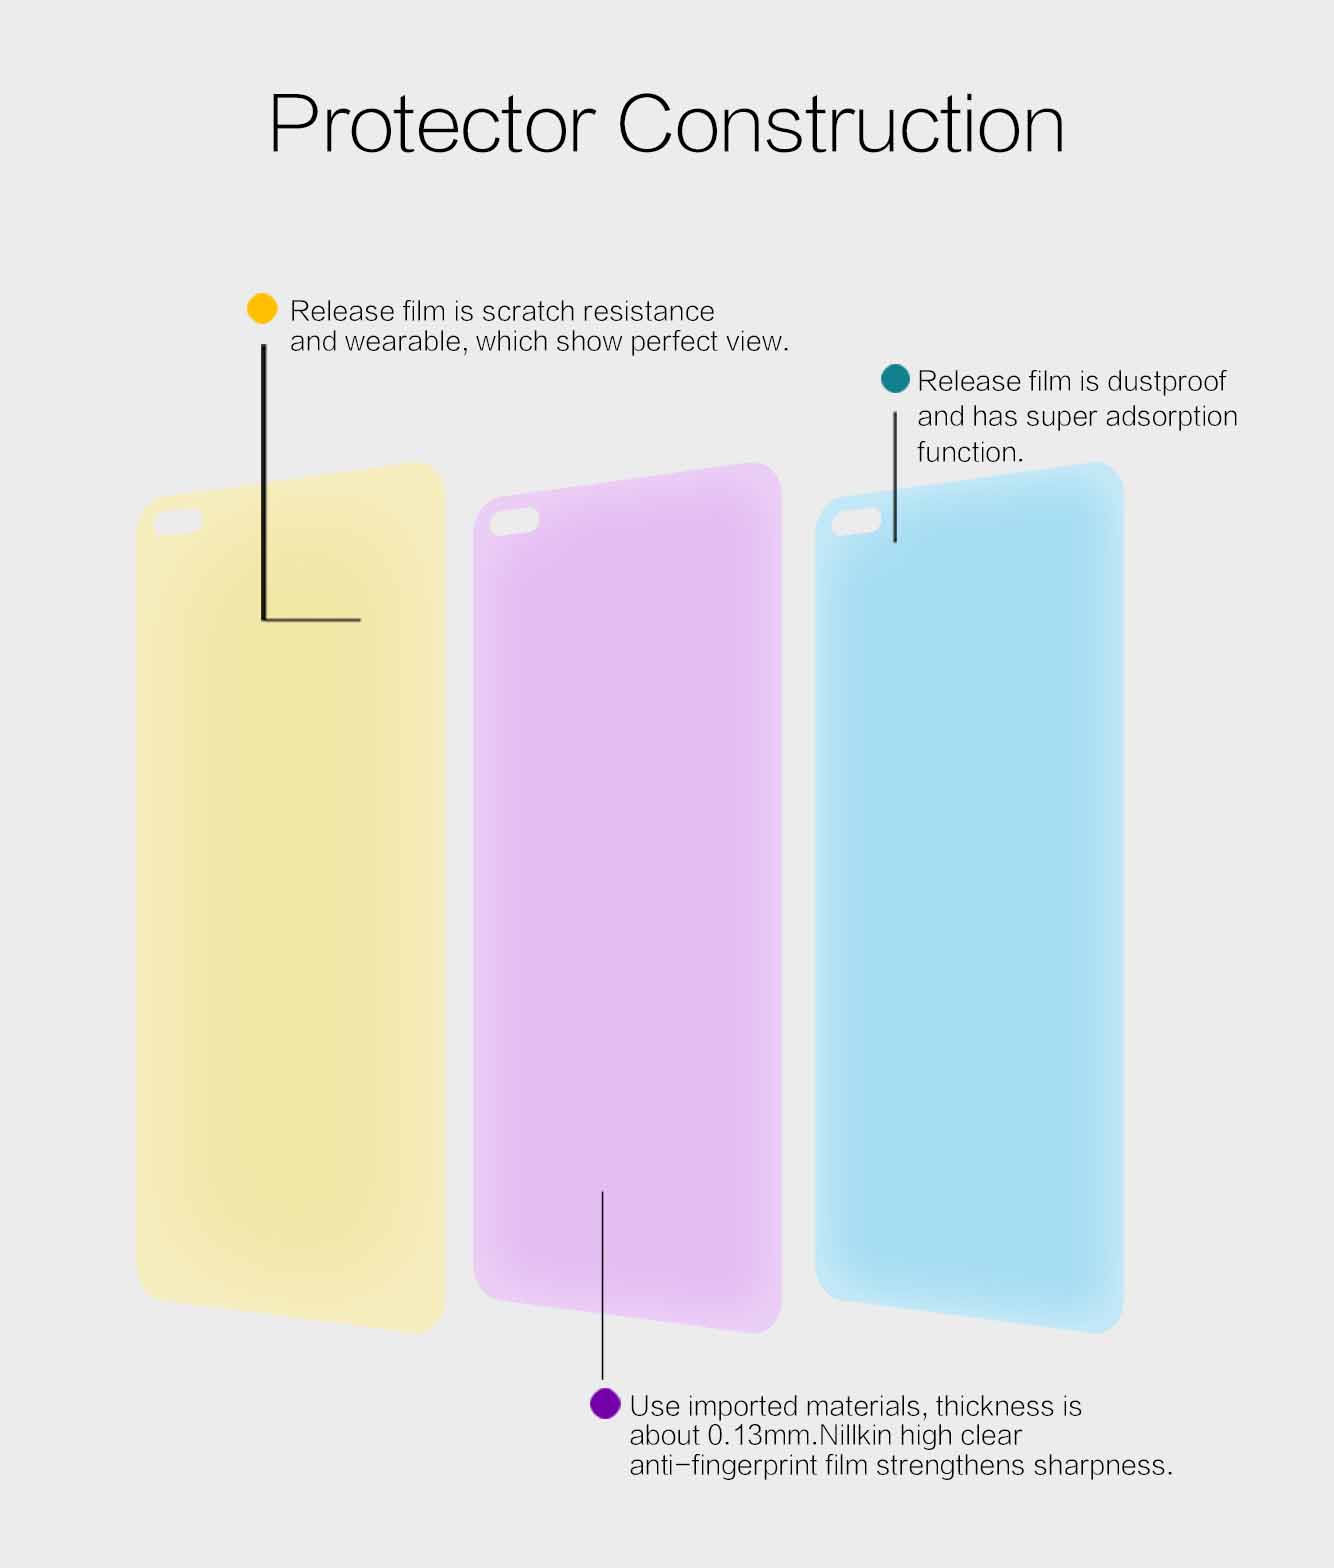 Realme 6 Pro screen protector